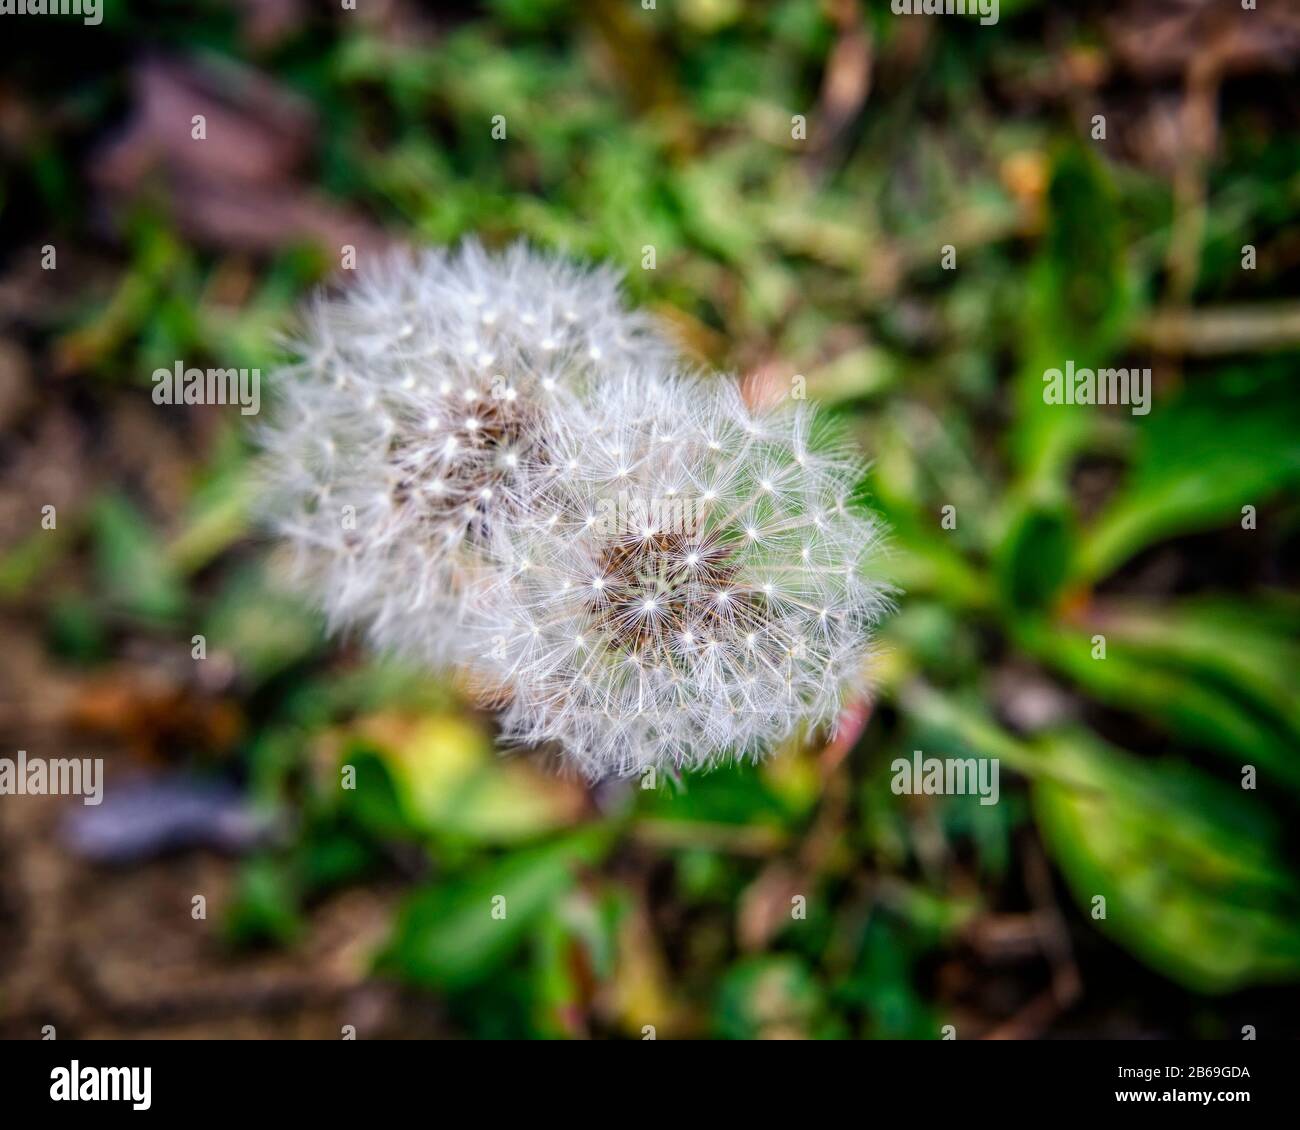 A close-up of a seedhead from a Dandelion (Taraxacum), Los Angeles, CA. Stock Photo